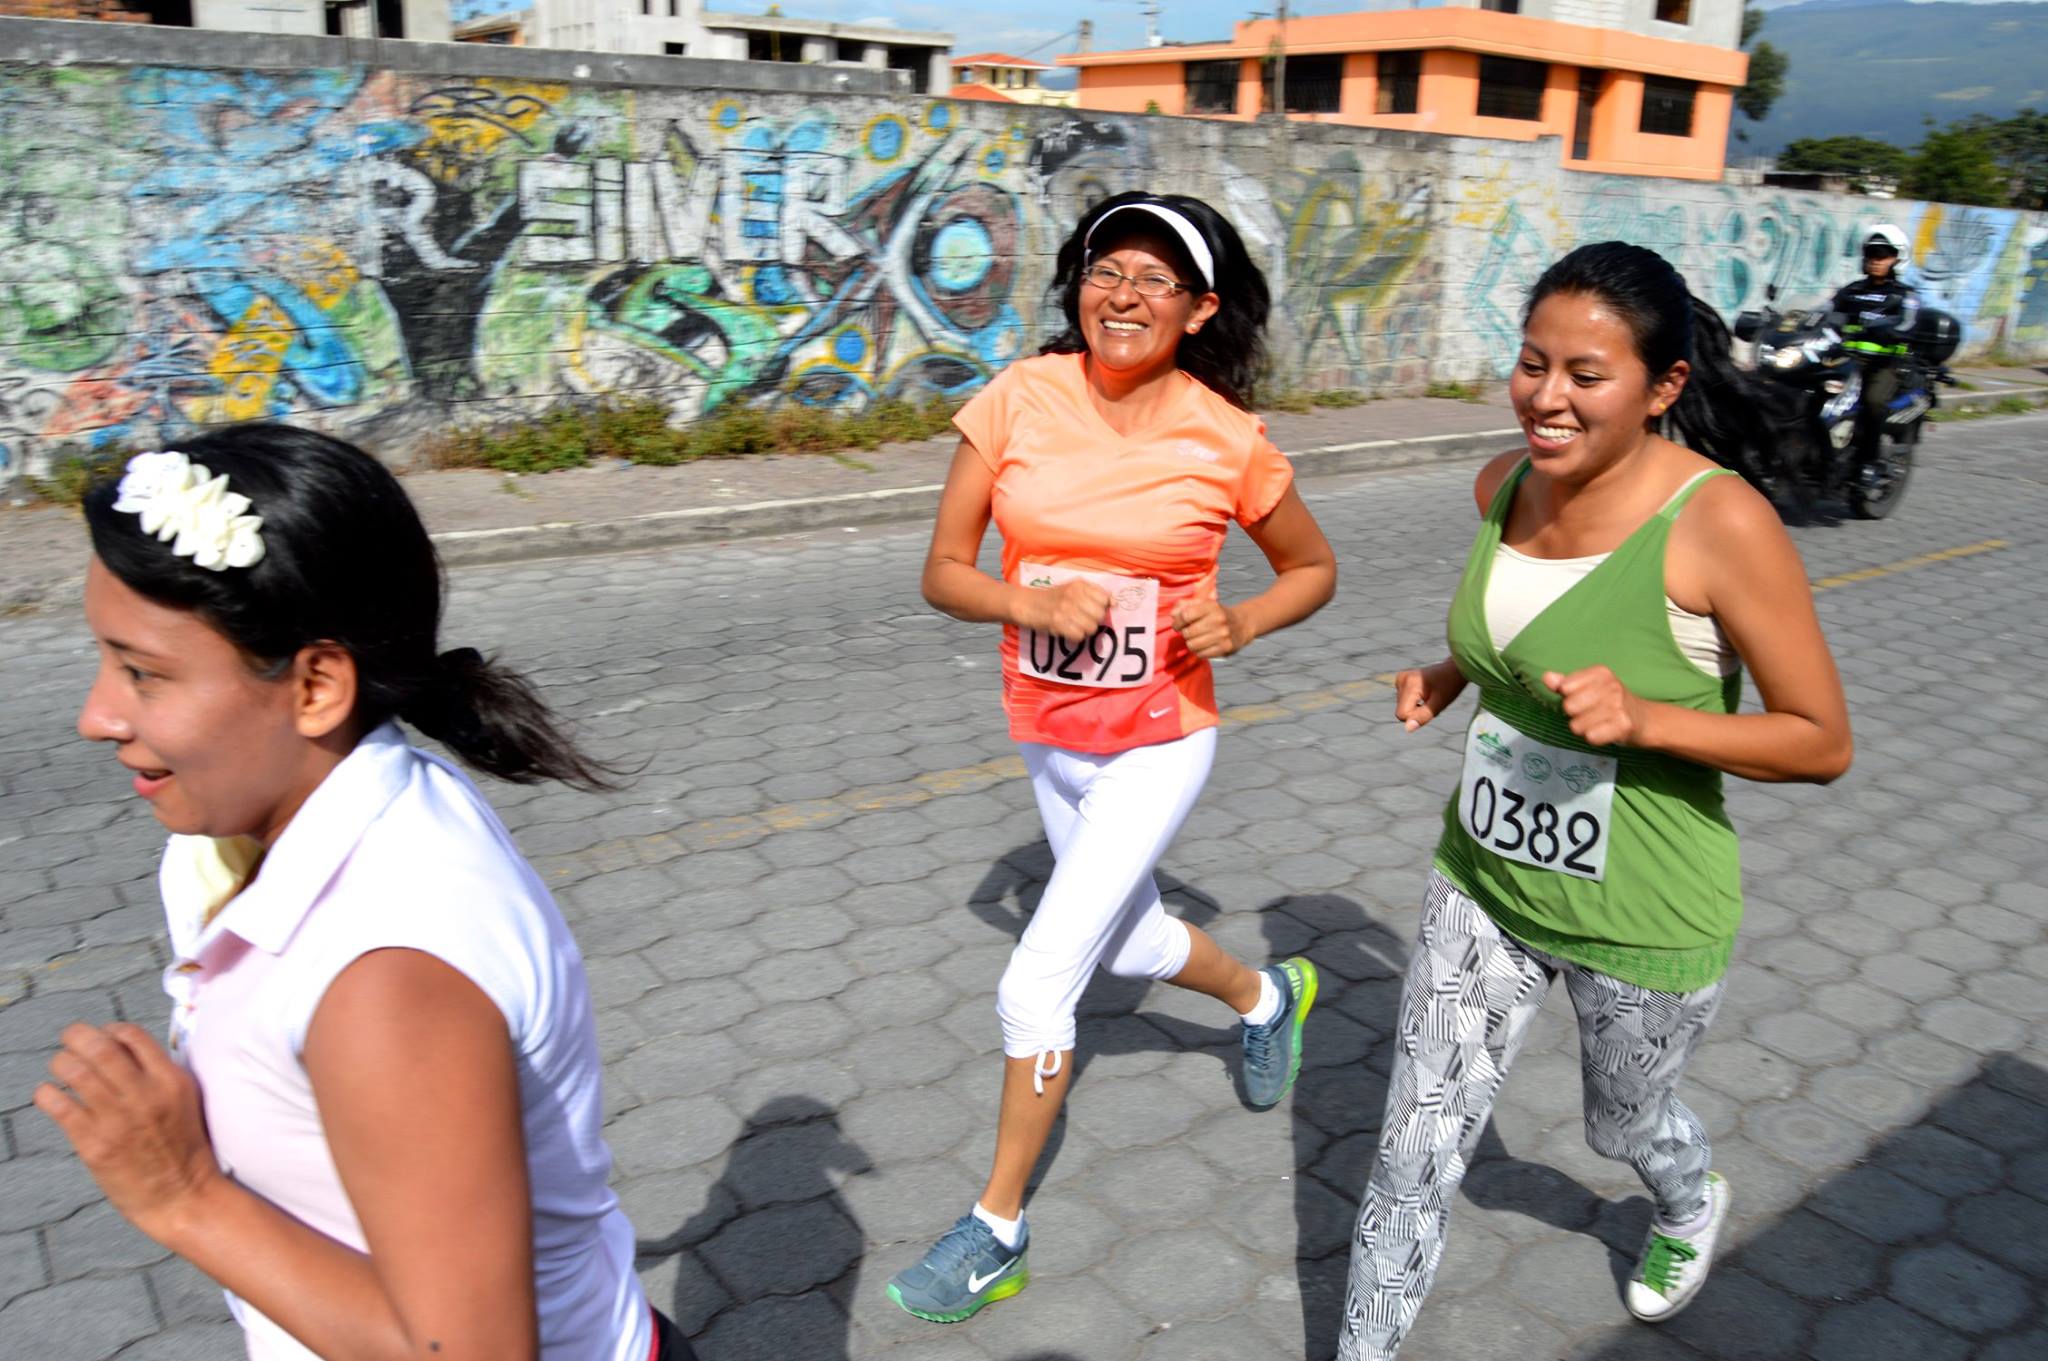 Ecuador 5K 2015 Ladies Running with Police Escort 2.jpg